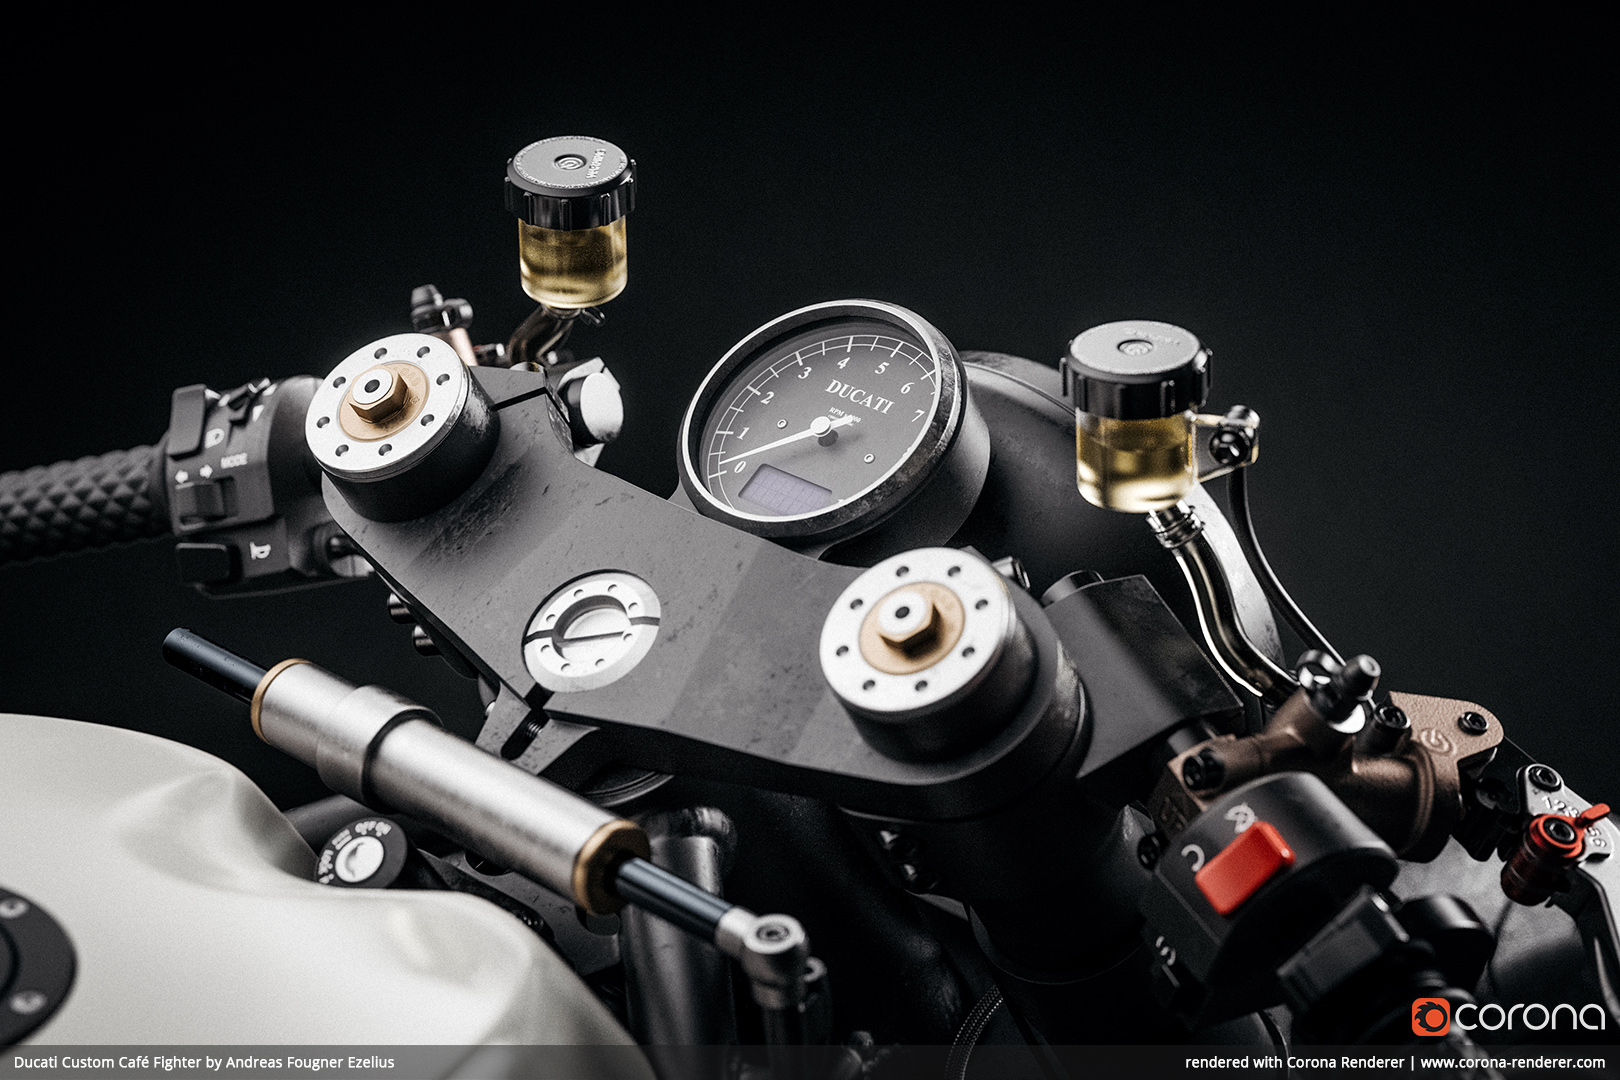 Ducati_Custom_Cafe_Fighter_by_Andreas_Fougner_Ezelius1.jpg